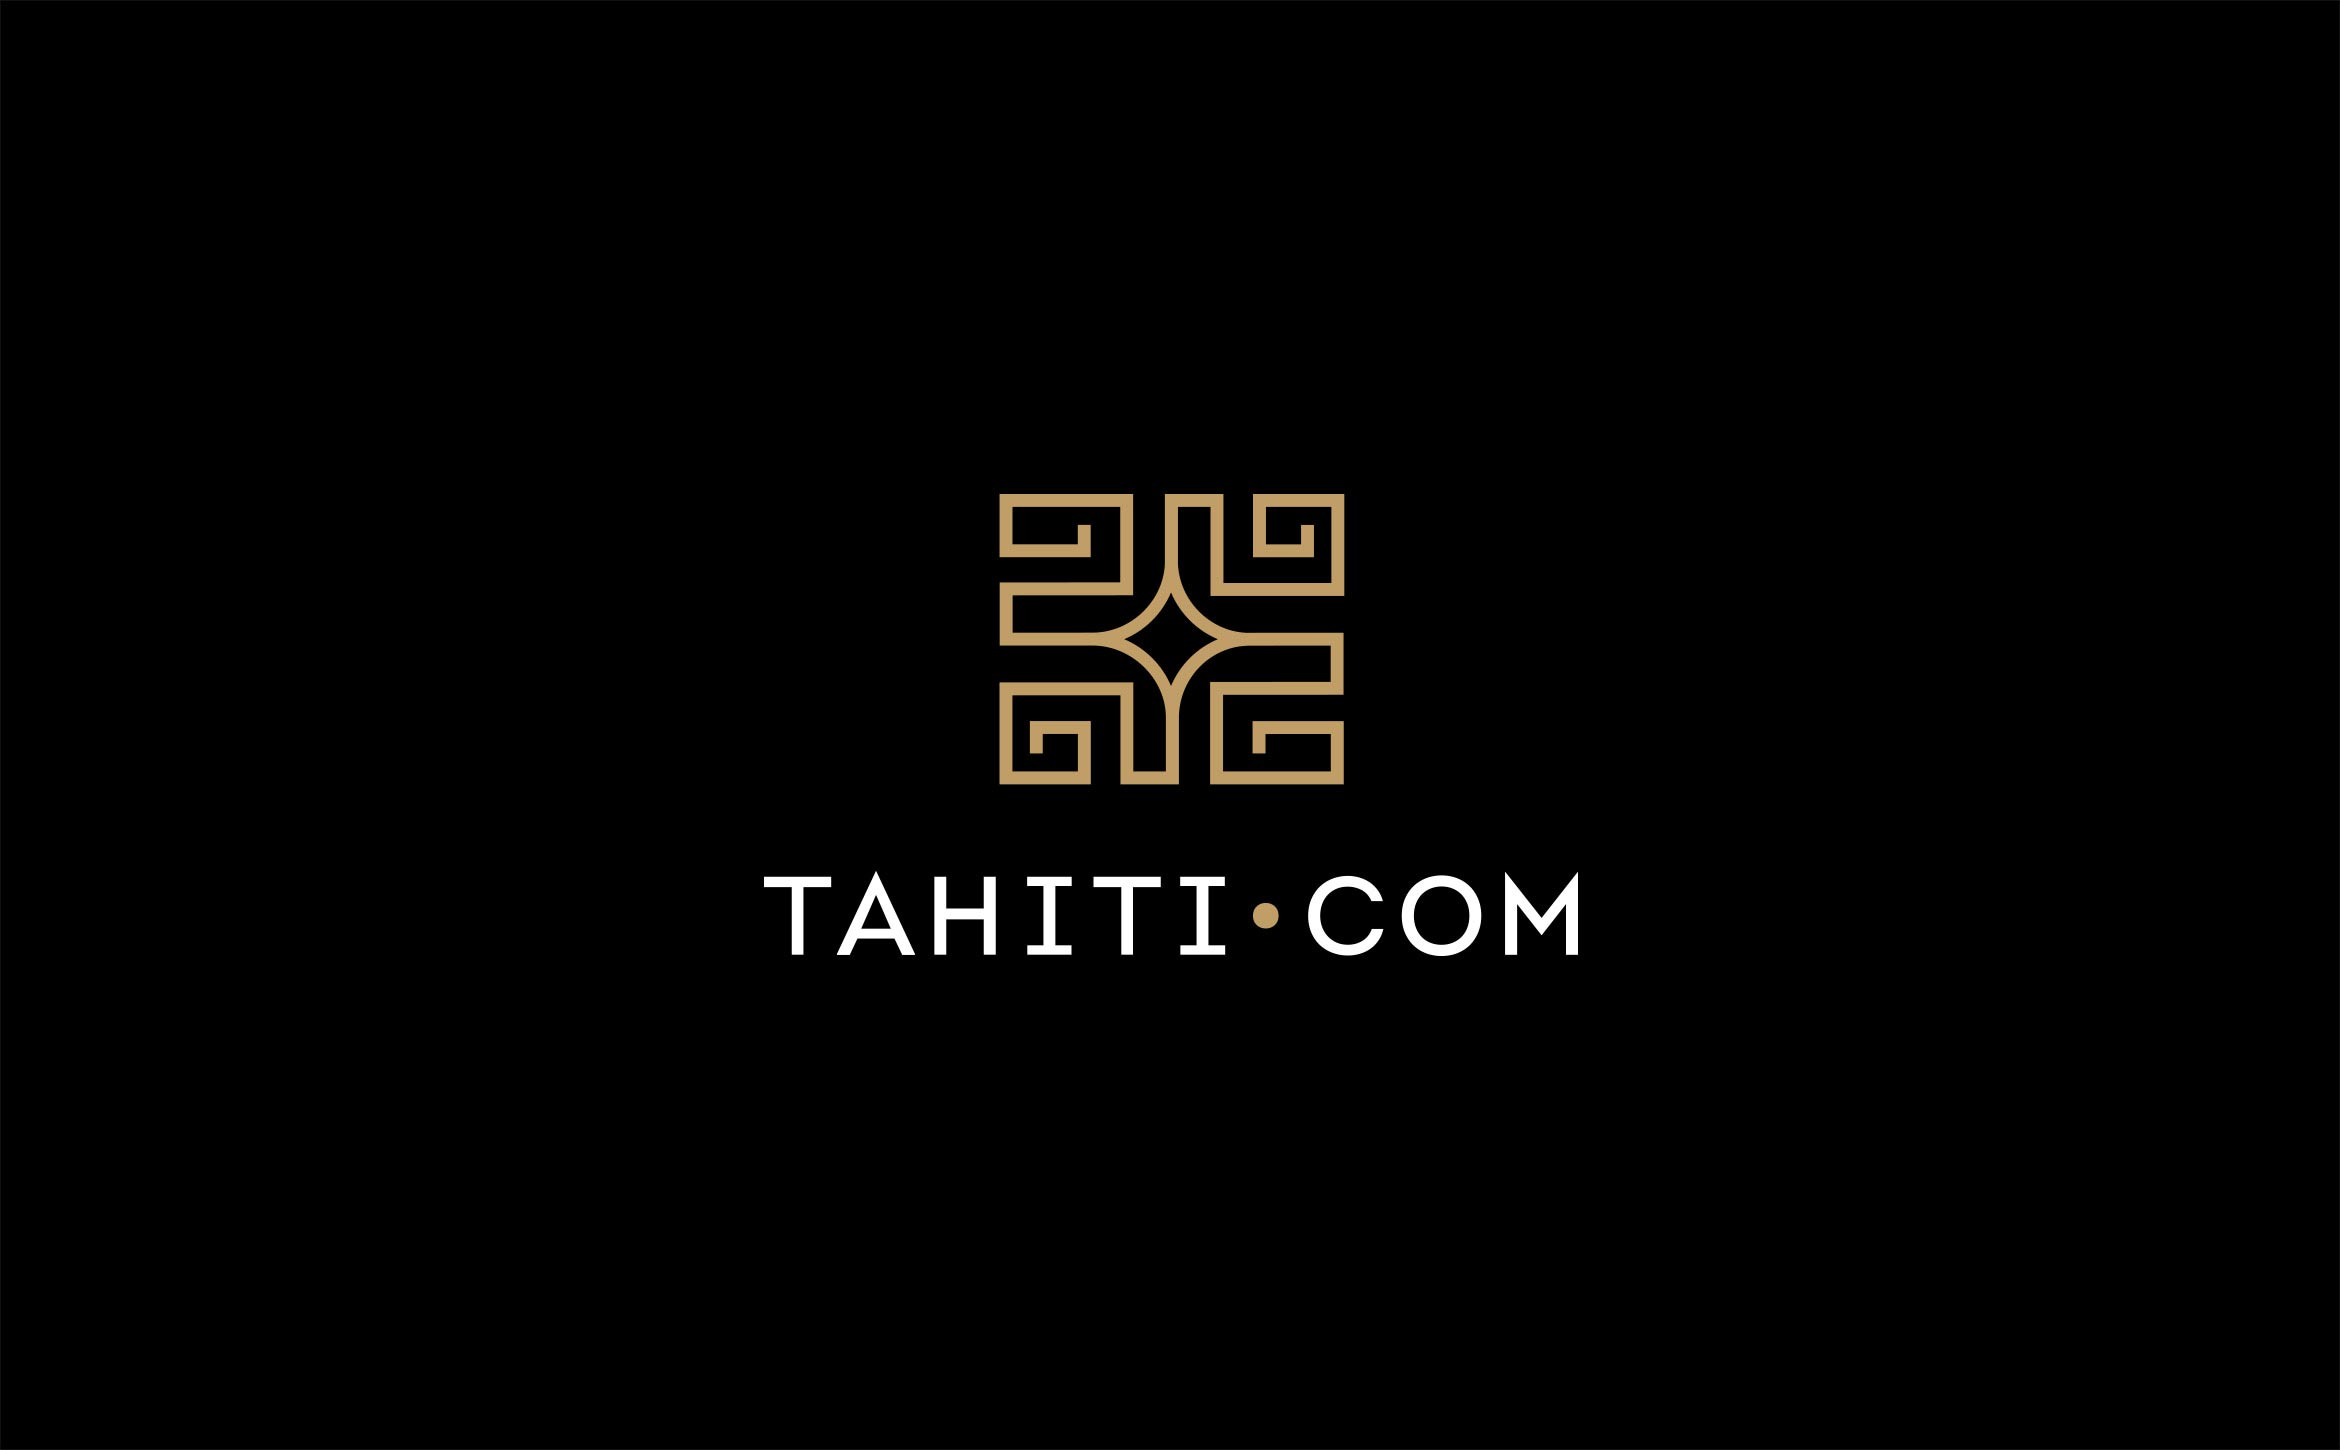 gold and white logo for tahiti.com on black